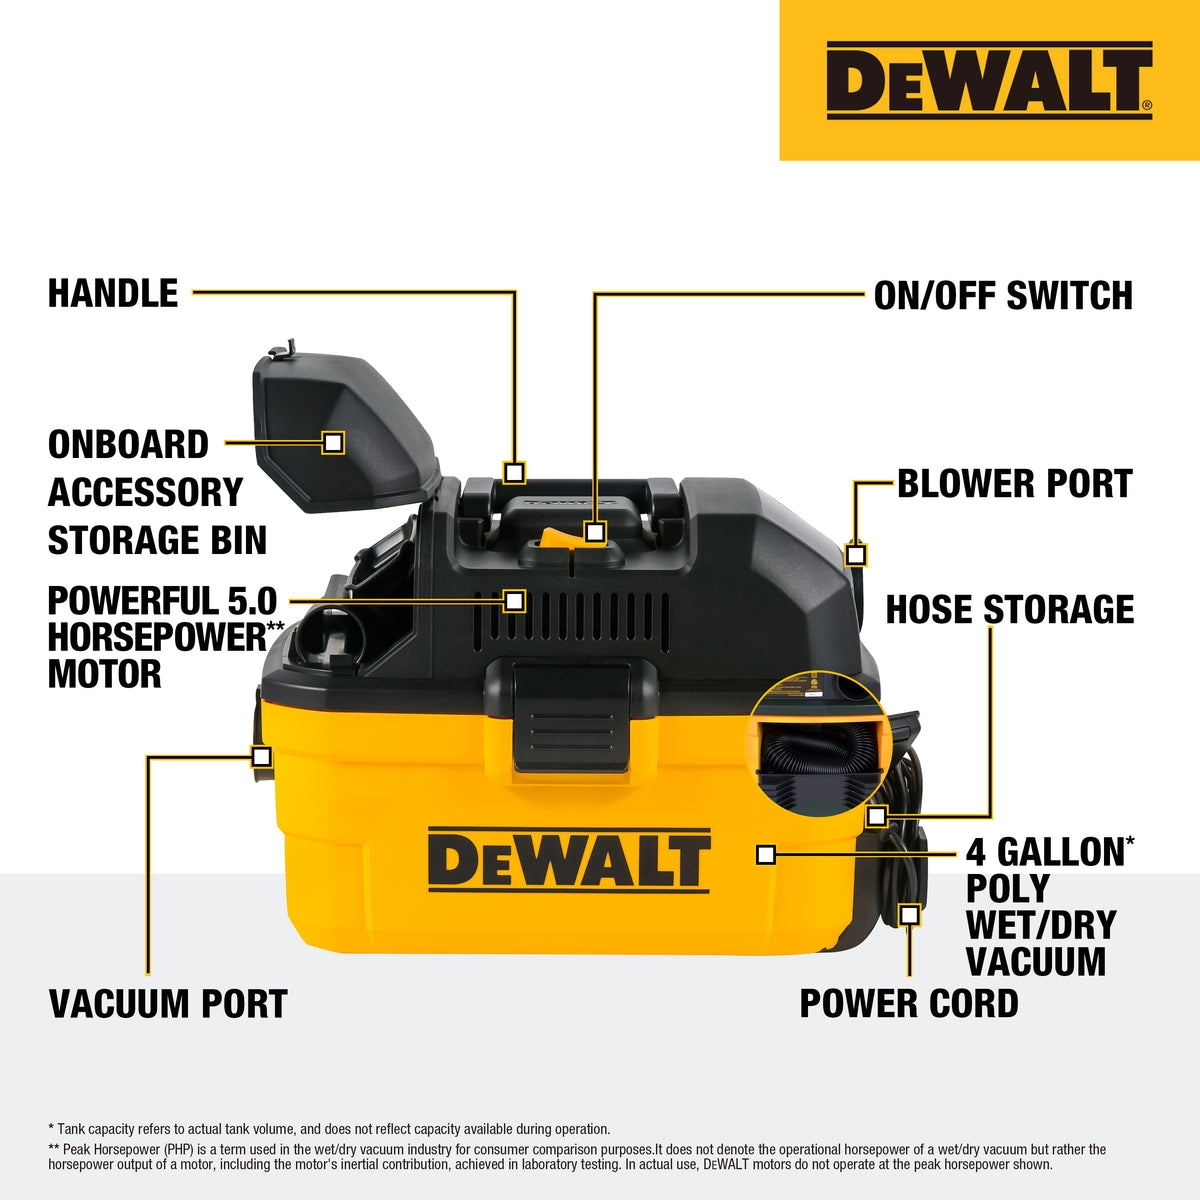 DXV04T DeWALT Portable 4 Gallon Wet/Dry Vac